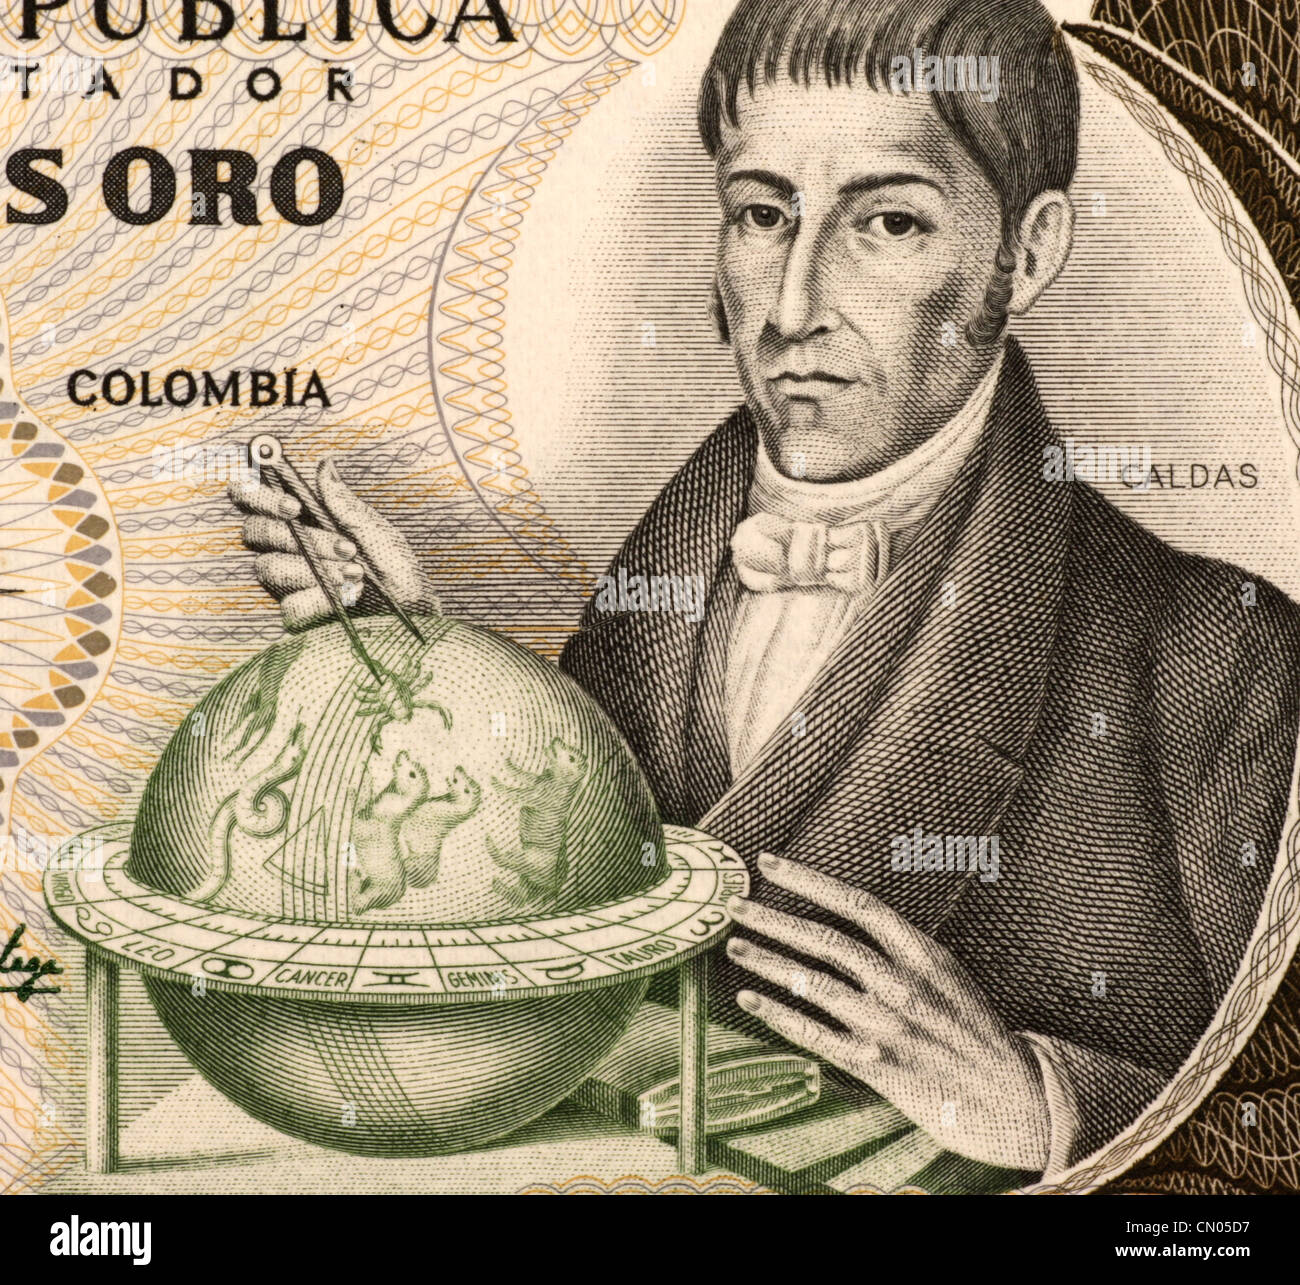 Francisco Jose de Caldas (1768-1816) on 20 Pesos Oro 1983 Banknote from Colombia. Stock Photo